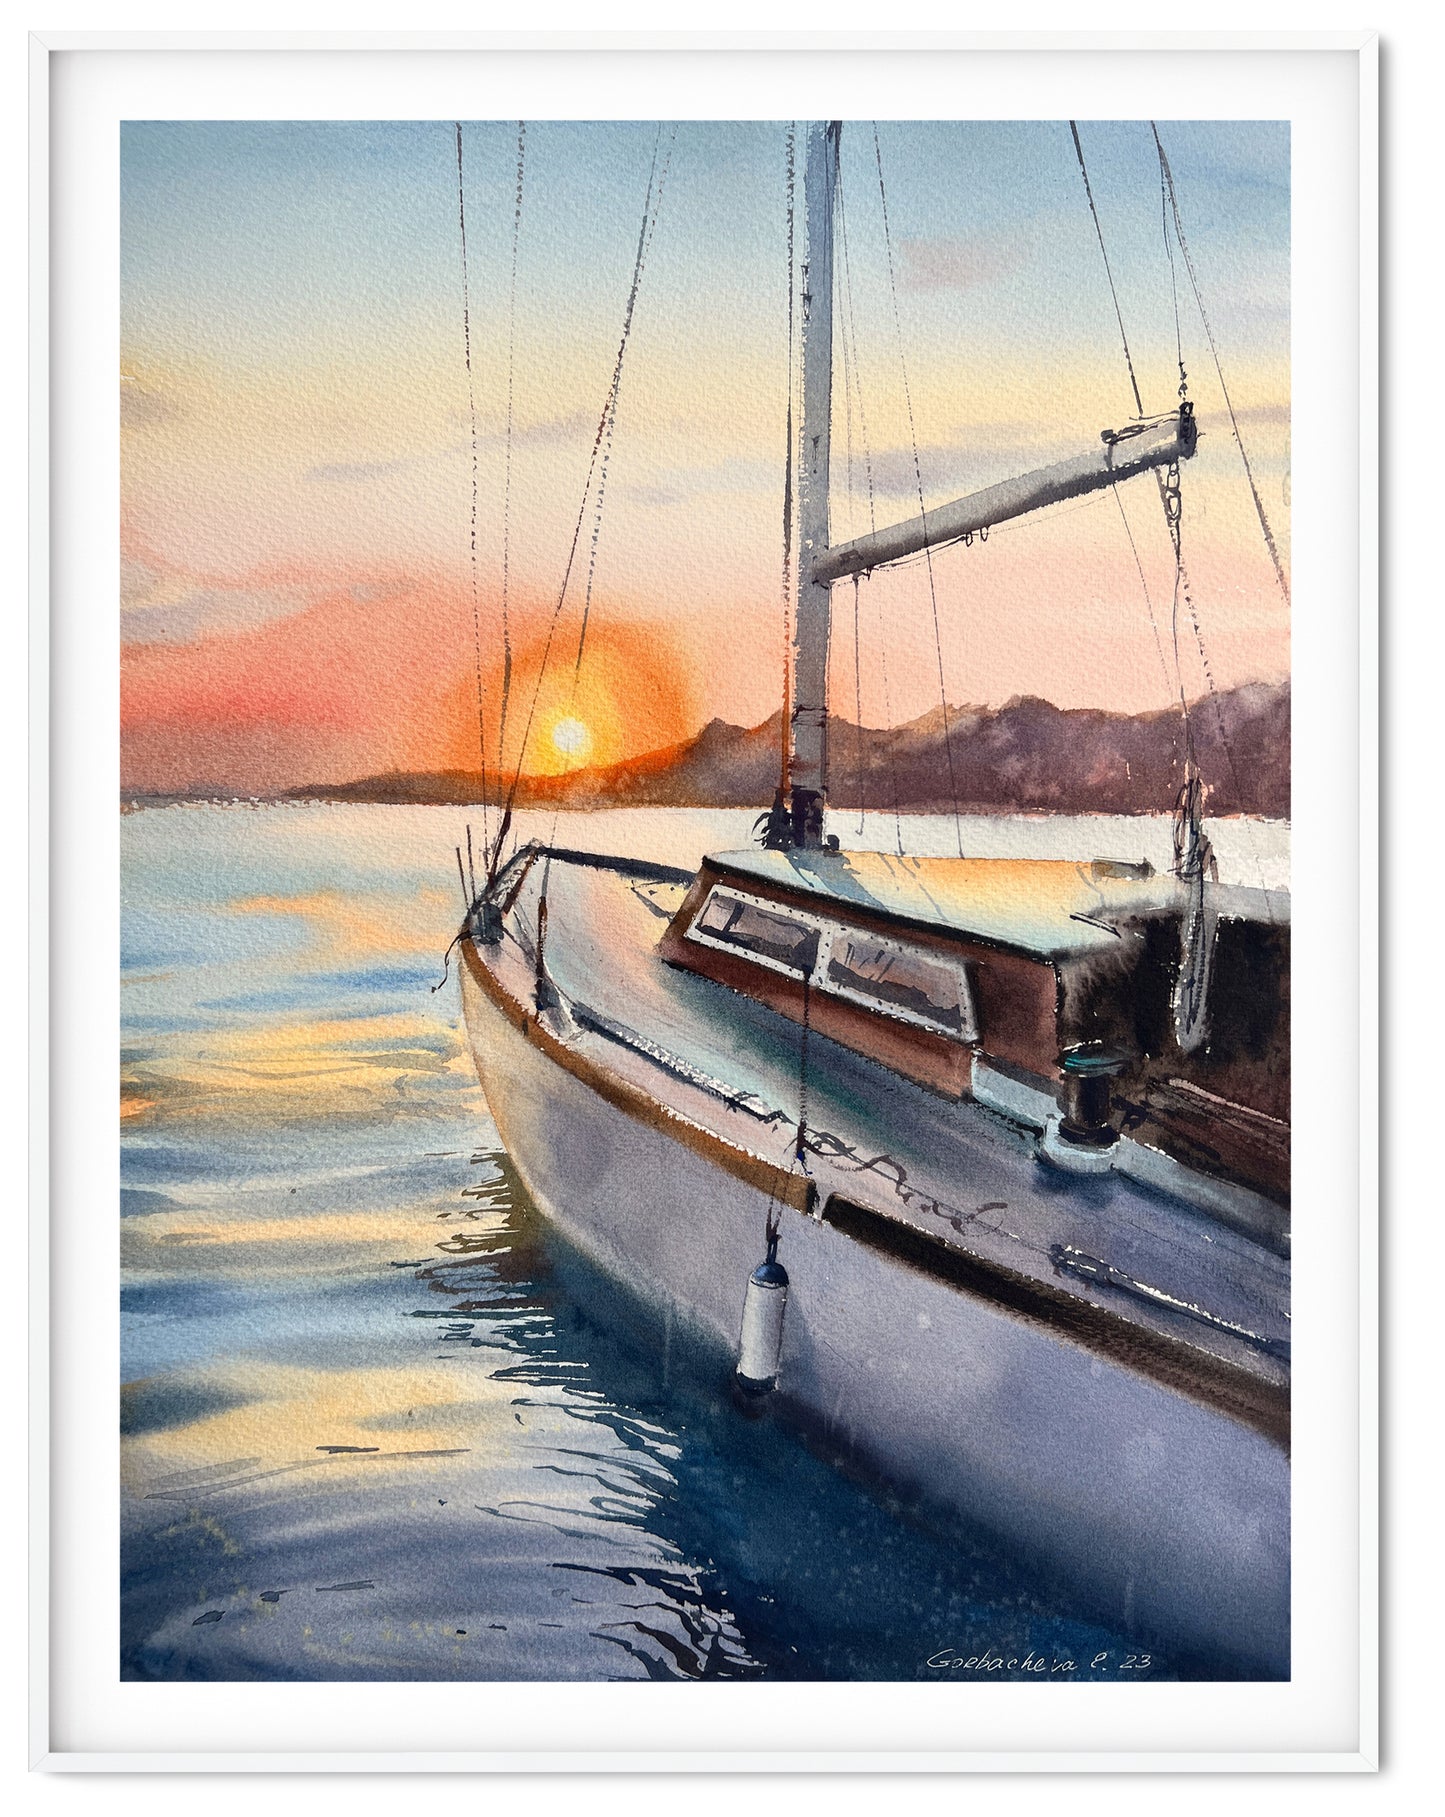 Nautical Painting Original Watercolor, Yacht Wall Art, Sunset Sailboat Artwork, Seascape, Coastal Living Room Decor